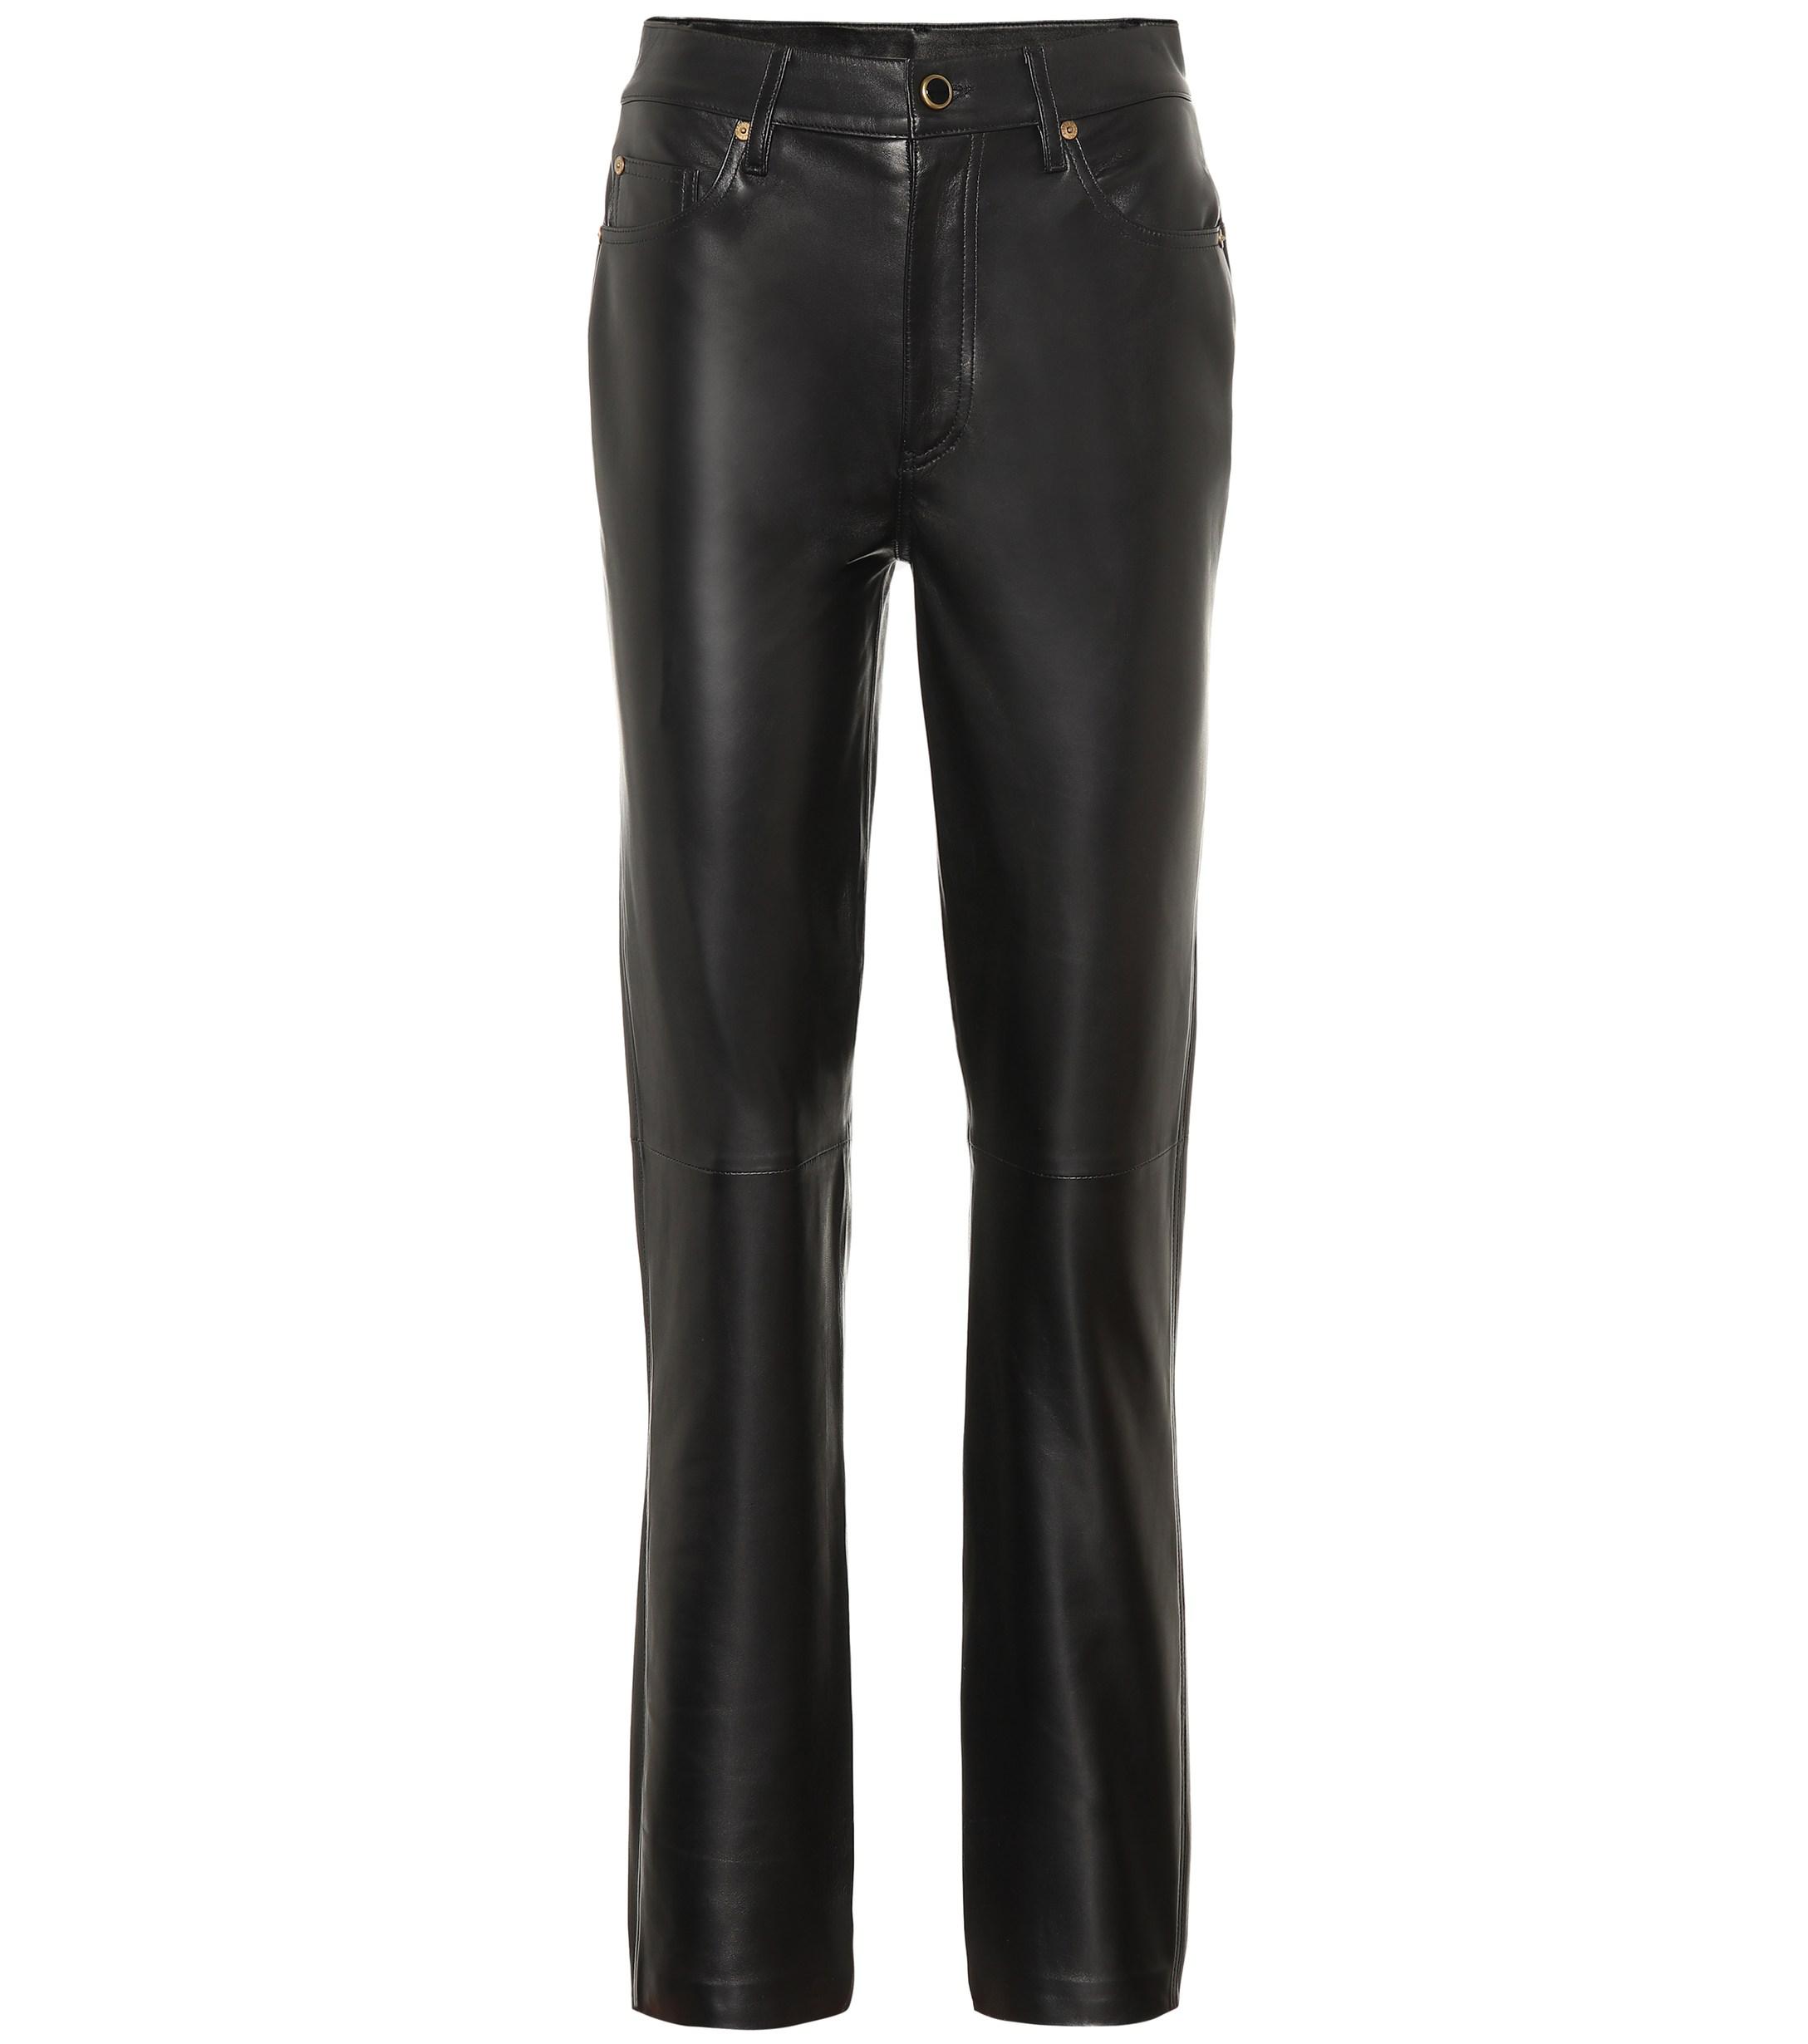 Khaite Victoria Leather Pants in Black - Lyst